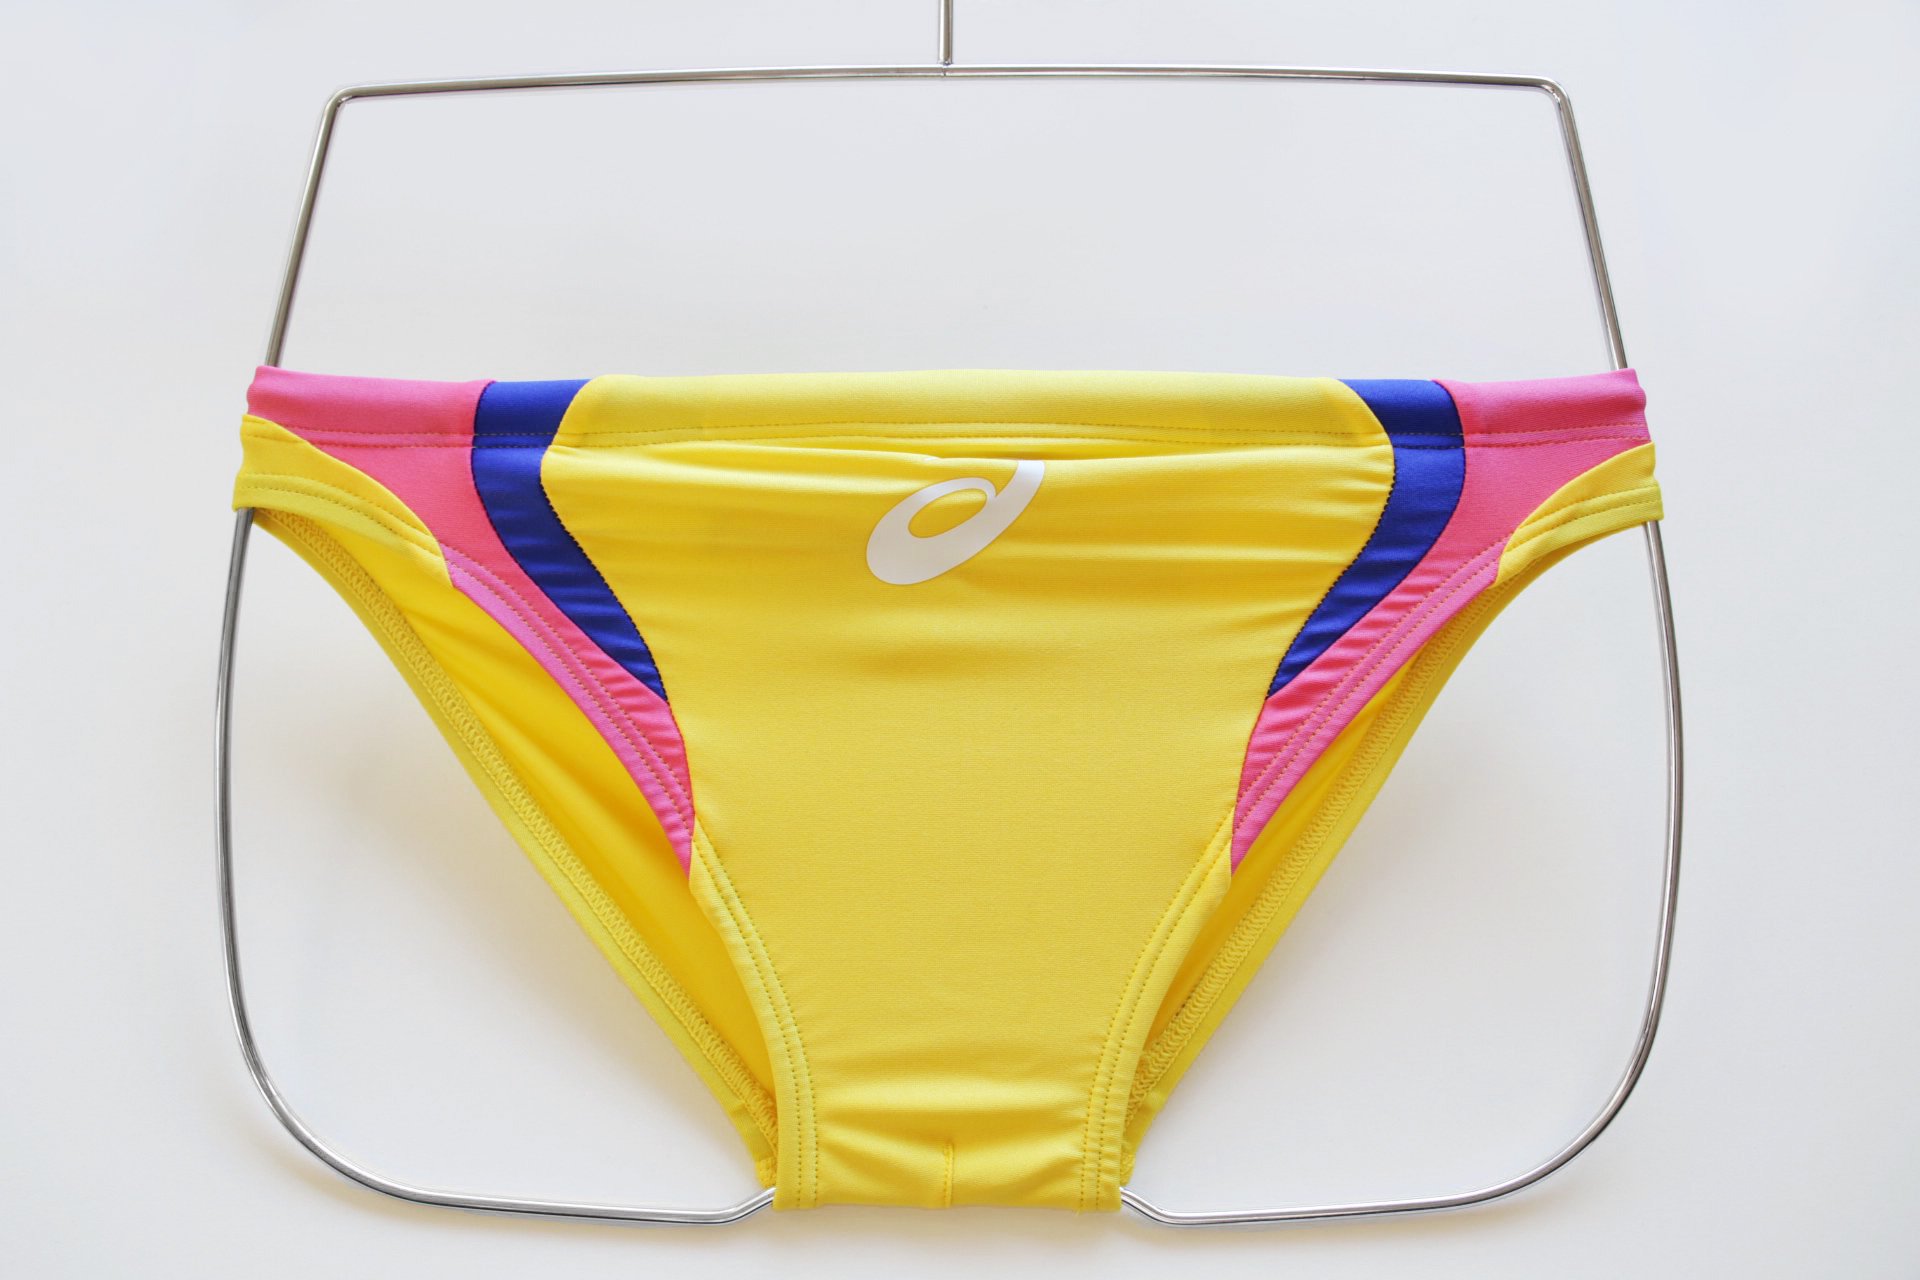 Bespoke asics Men's Competition Swimwear Successor to HYDRO-CD Brief